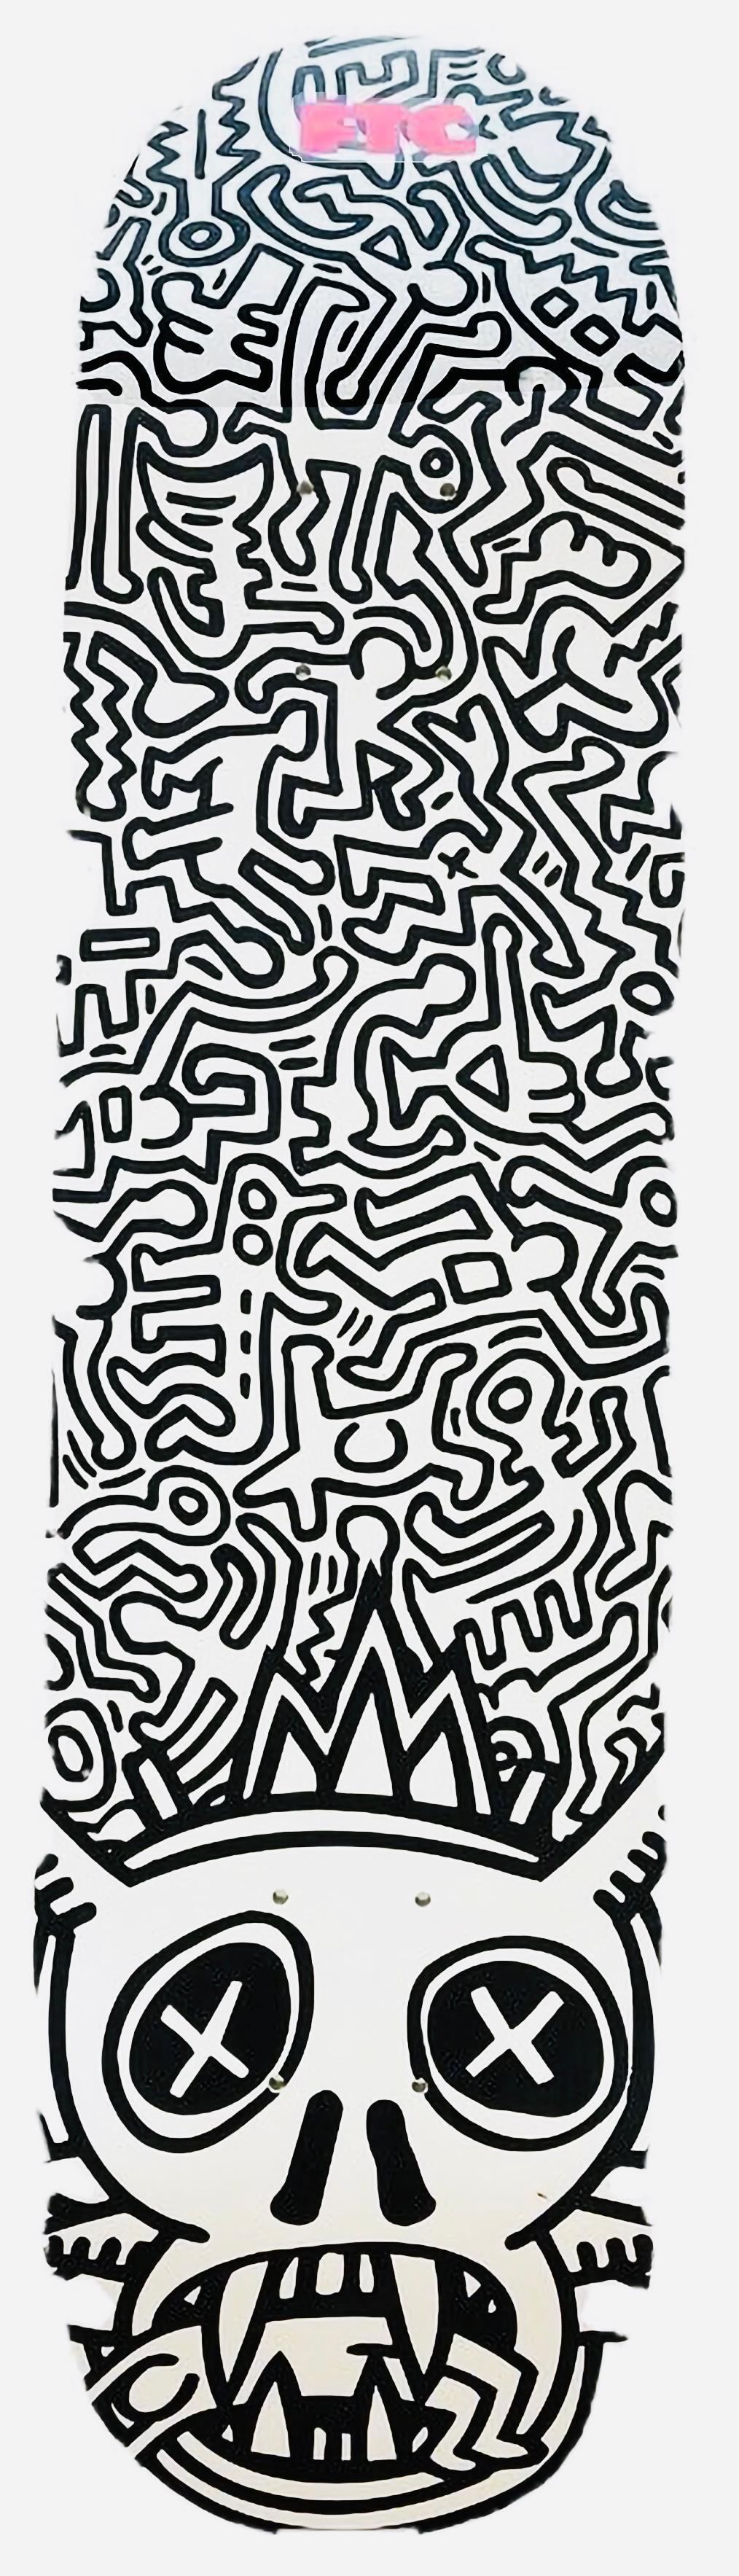 Vintage Keith Haring Skateboard Deck (Keith Haring skate deck) - Print by (after) Keith Haring